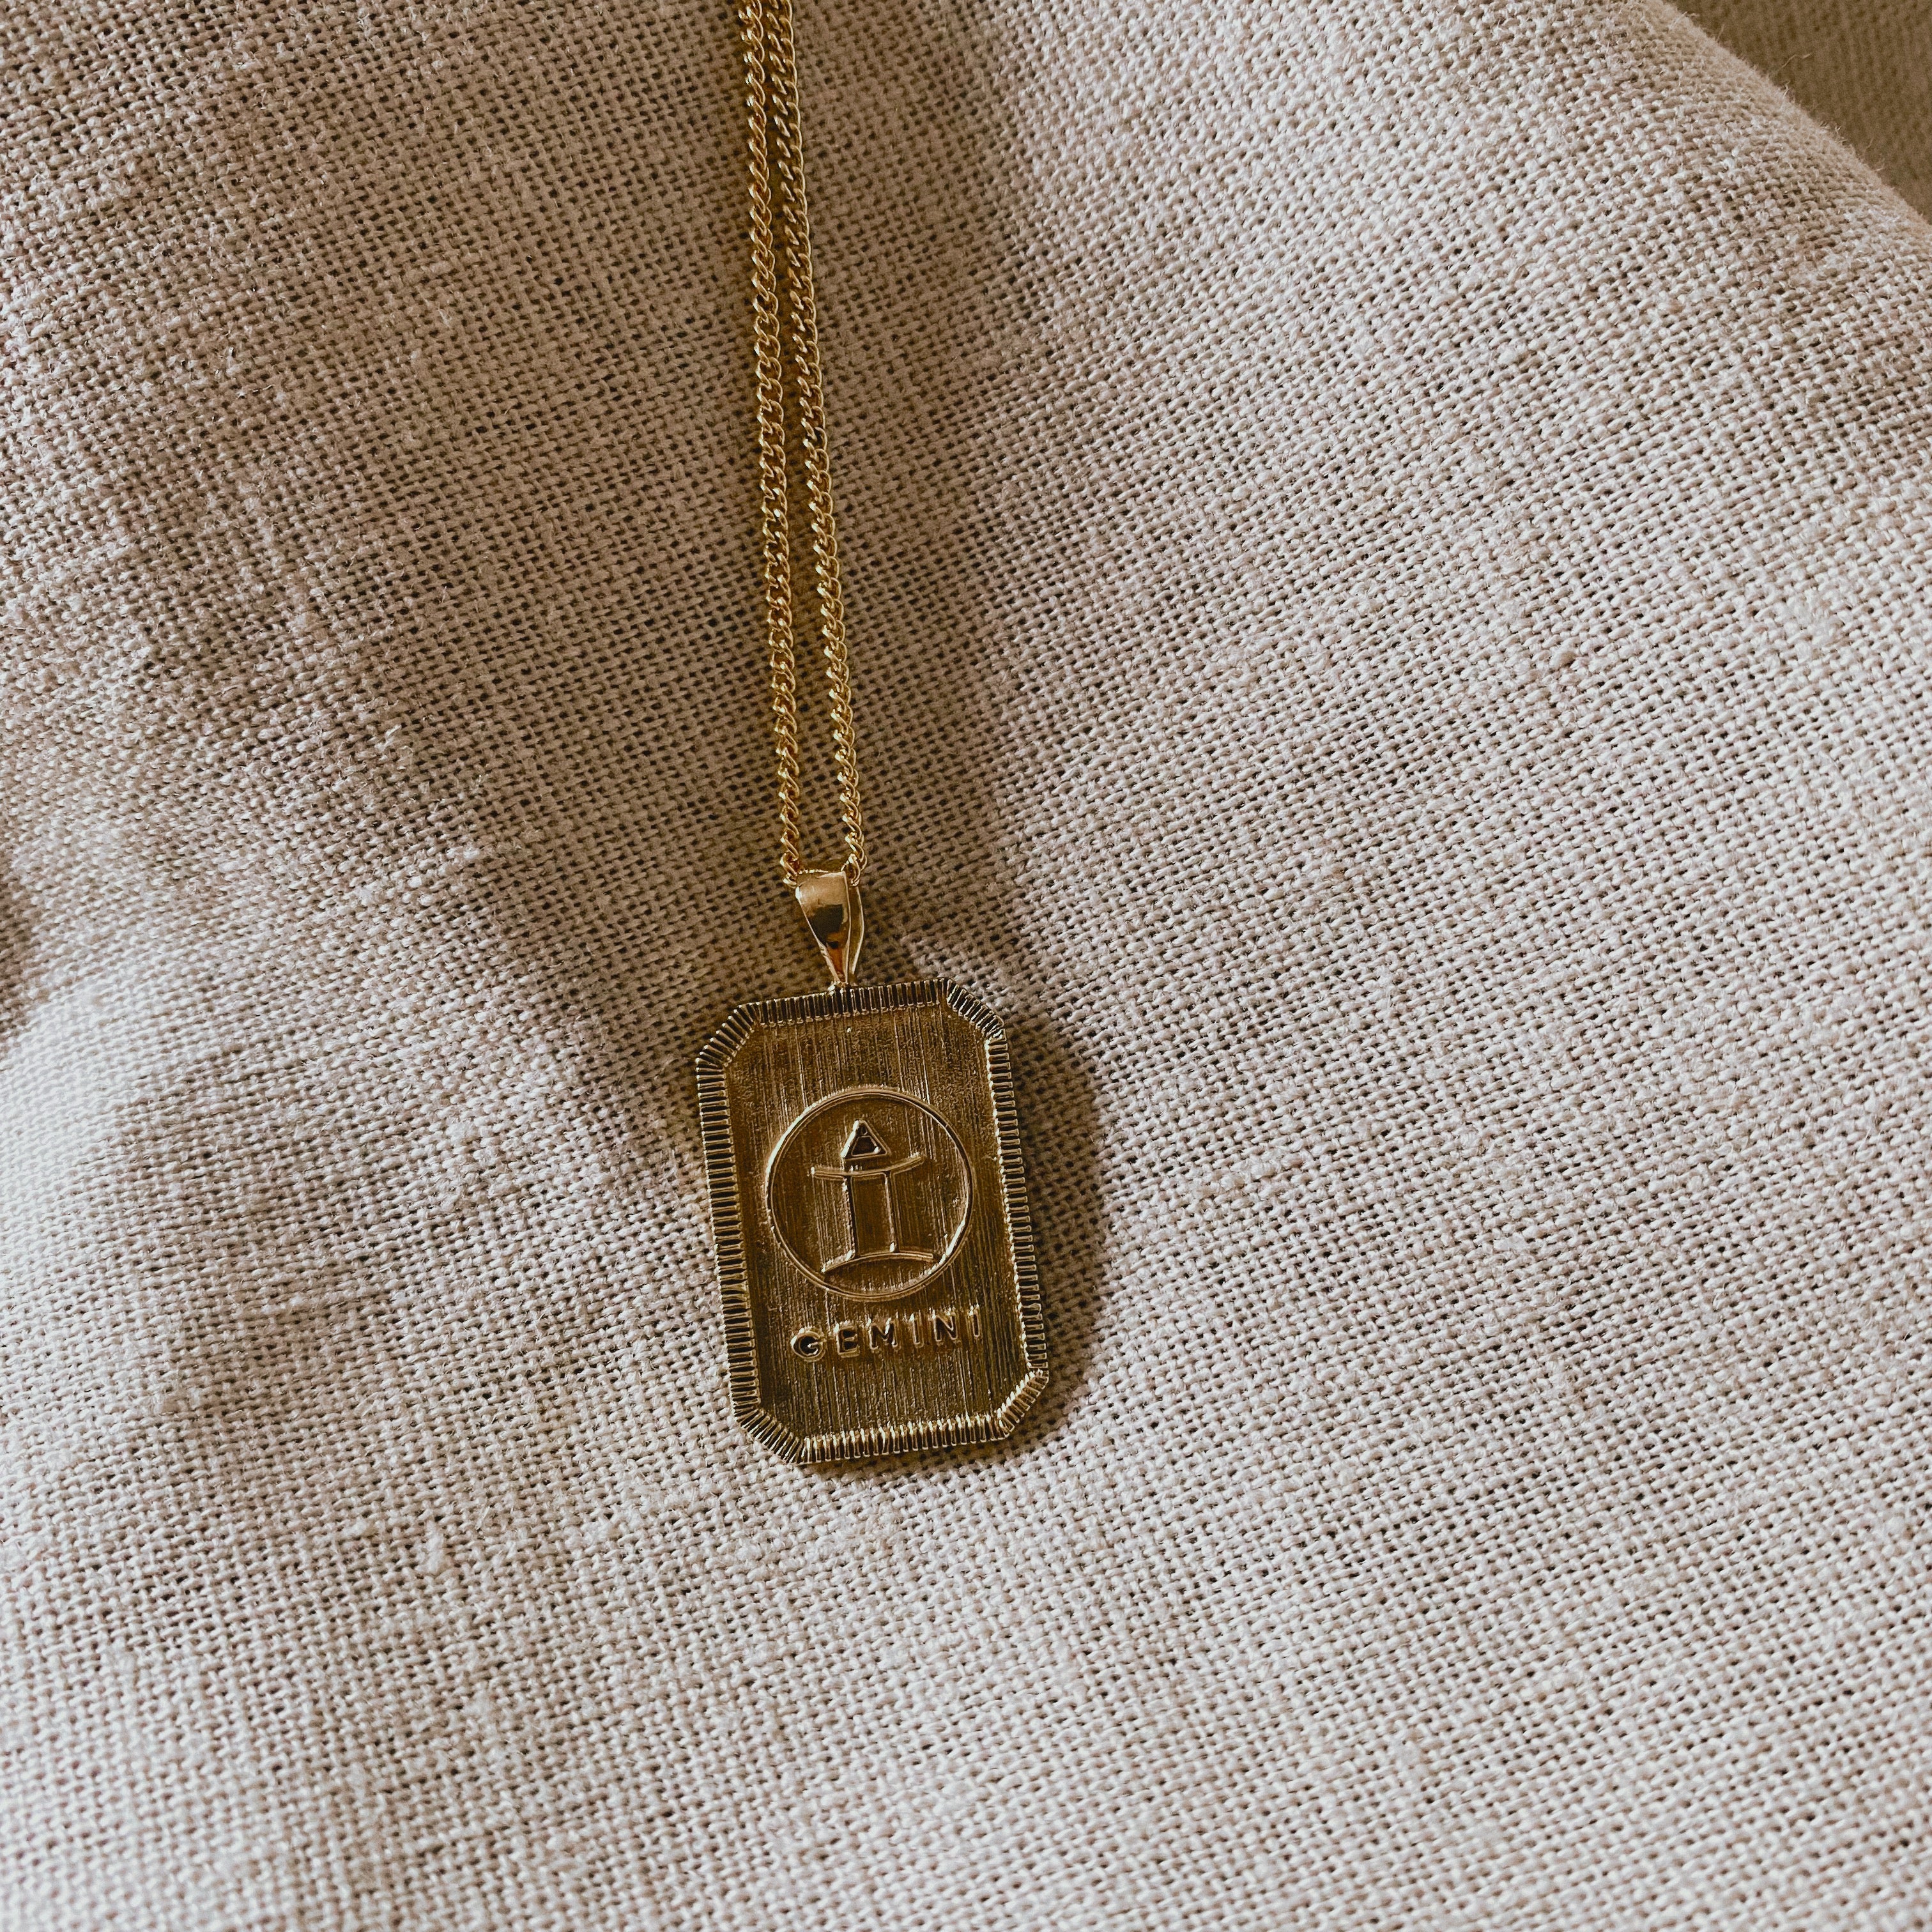 ZODIAC. Collection GEMINI | ZWILLING Halskette | Necklace Gold | Sternzeichen Kette